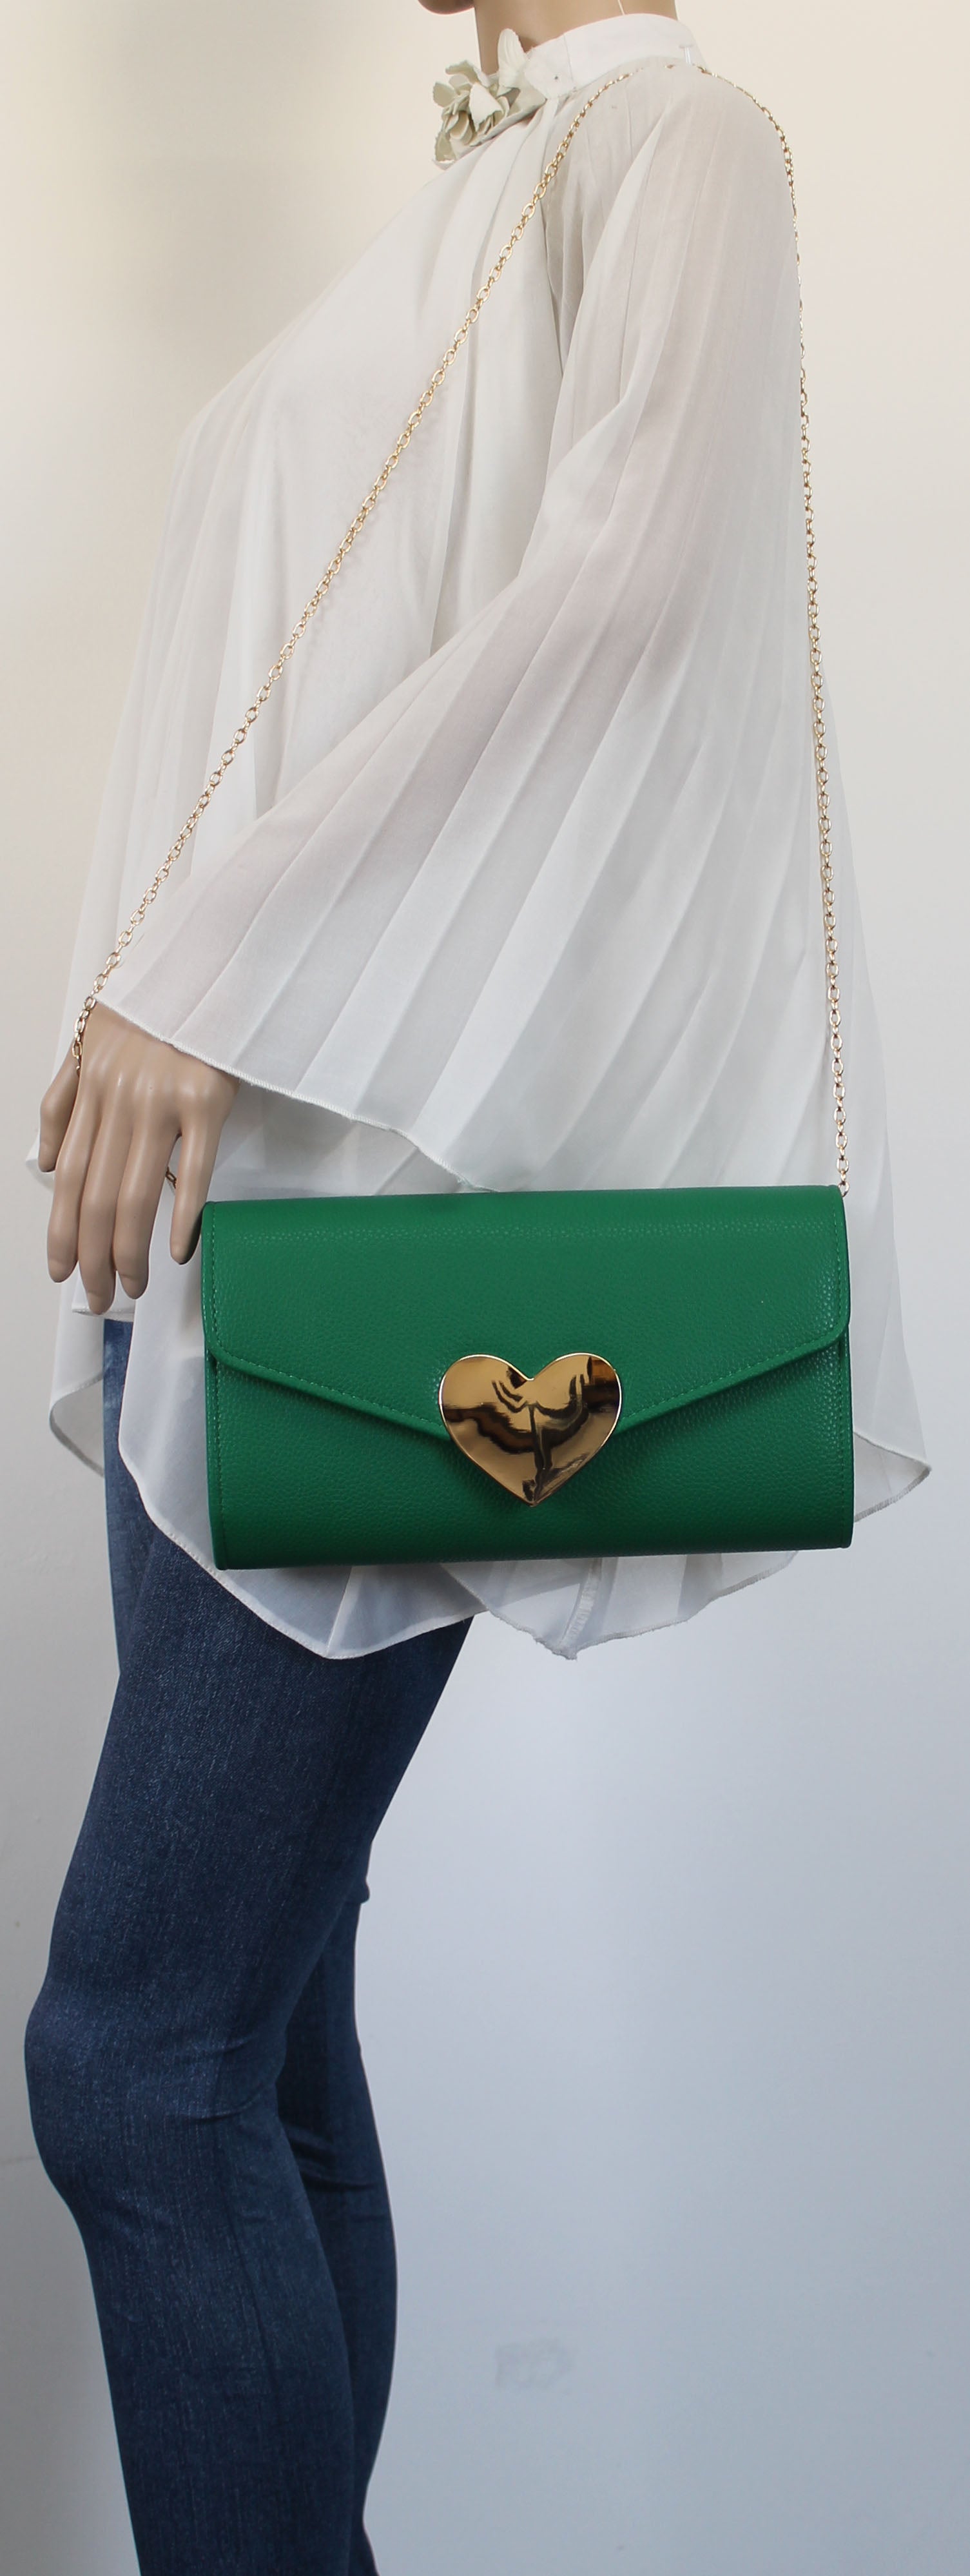 SWANKYSWANS Corrie Heart Clutch Bag Green Cute Cheap Clutch Bag For Weddings School and Work